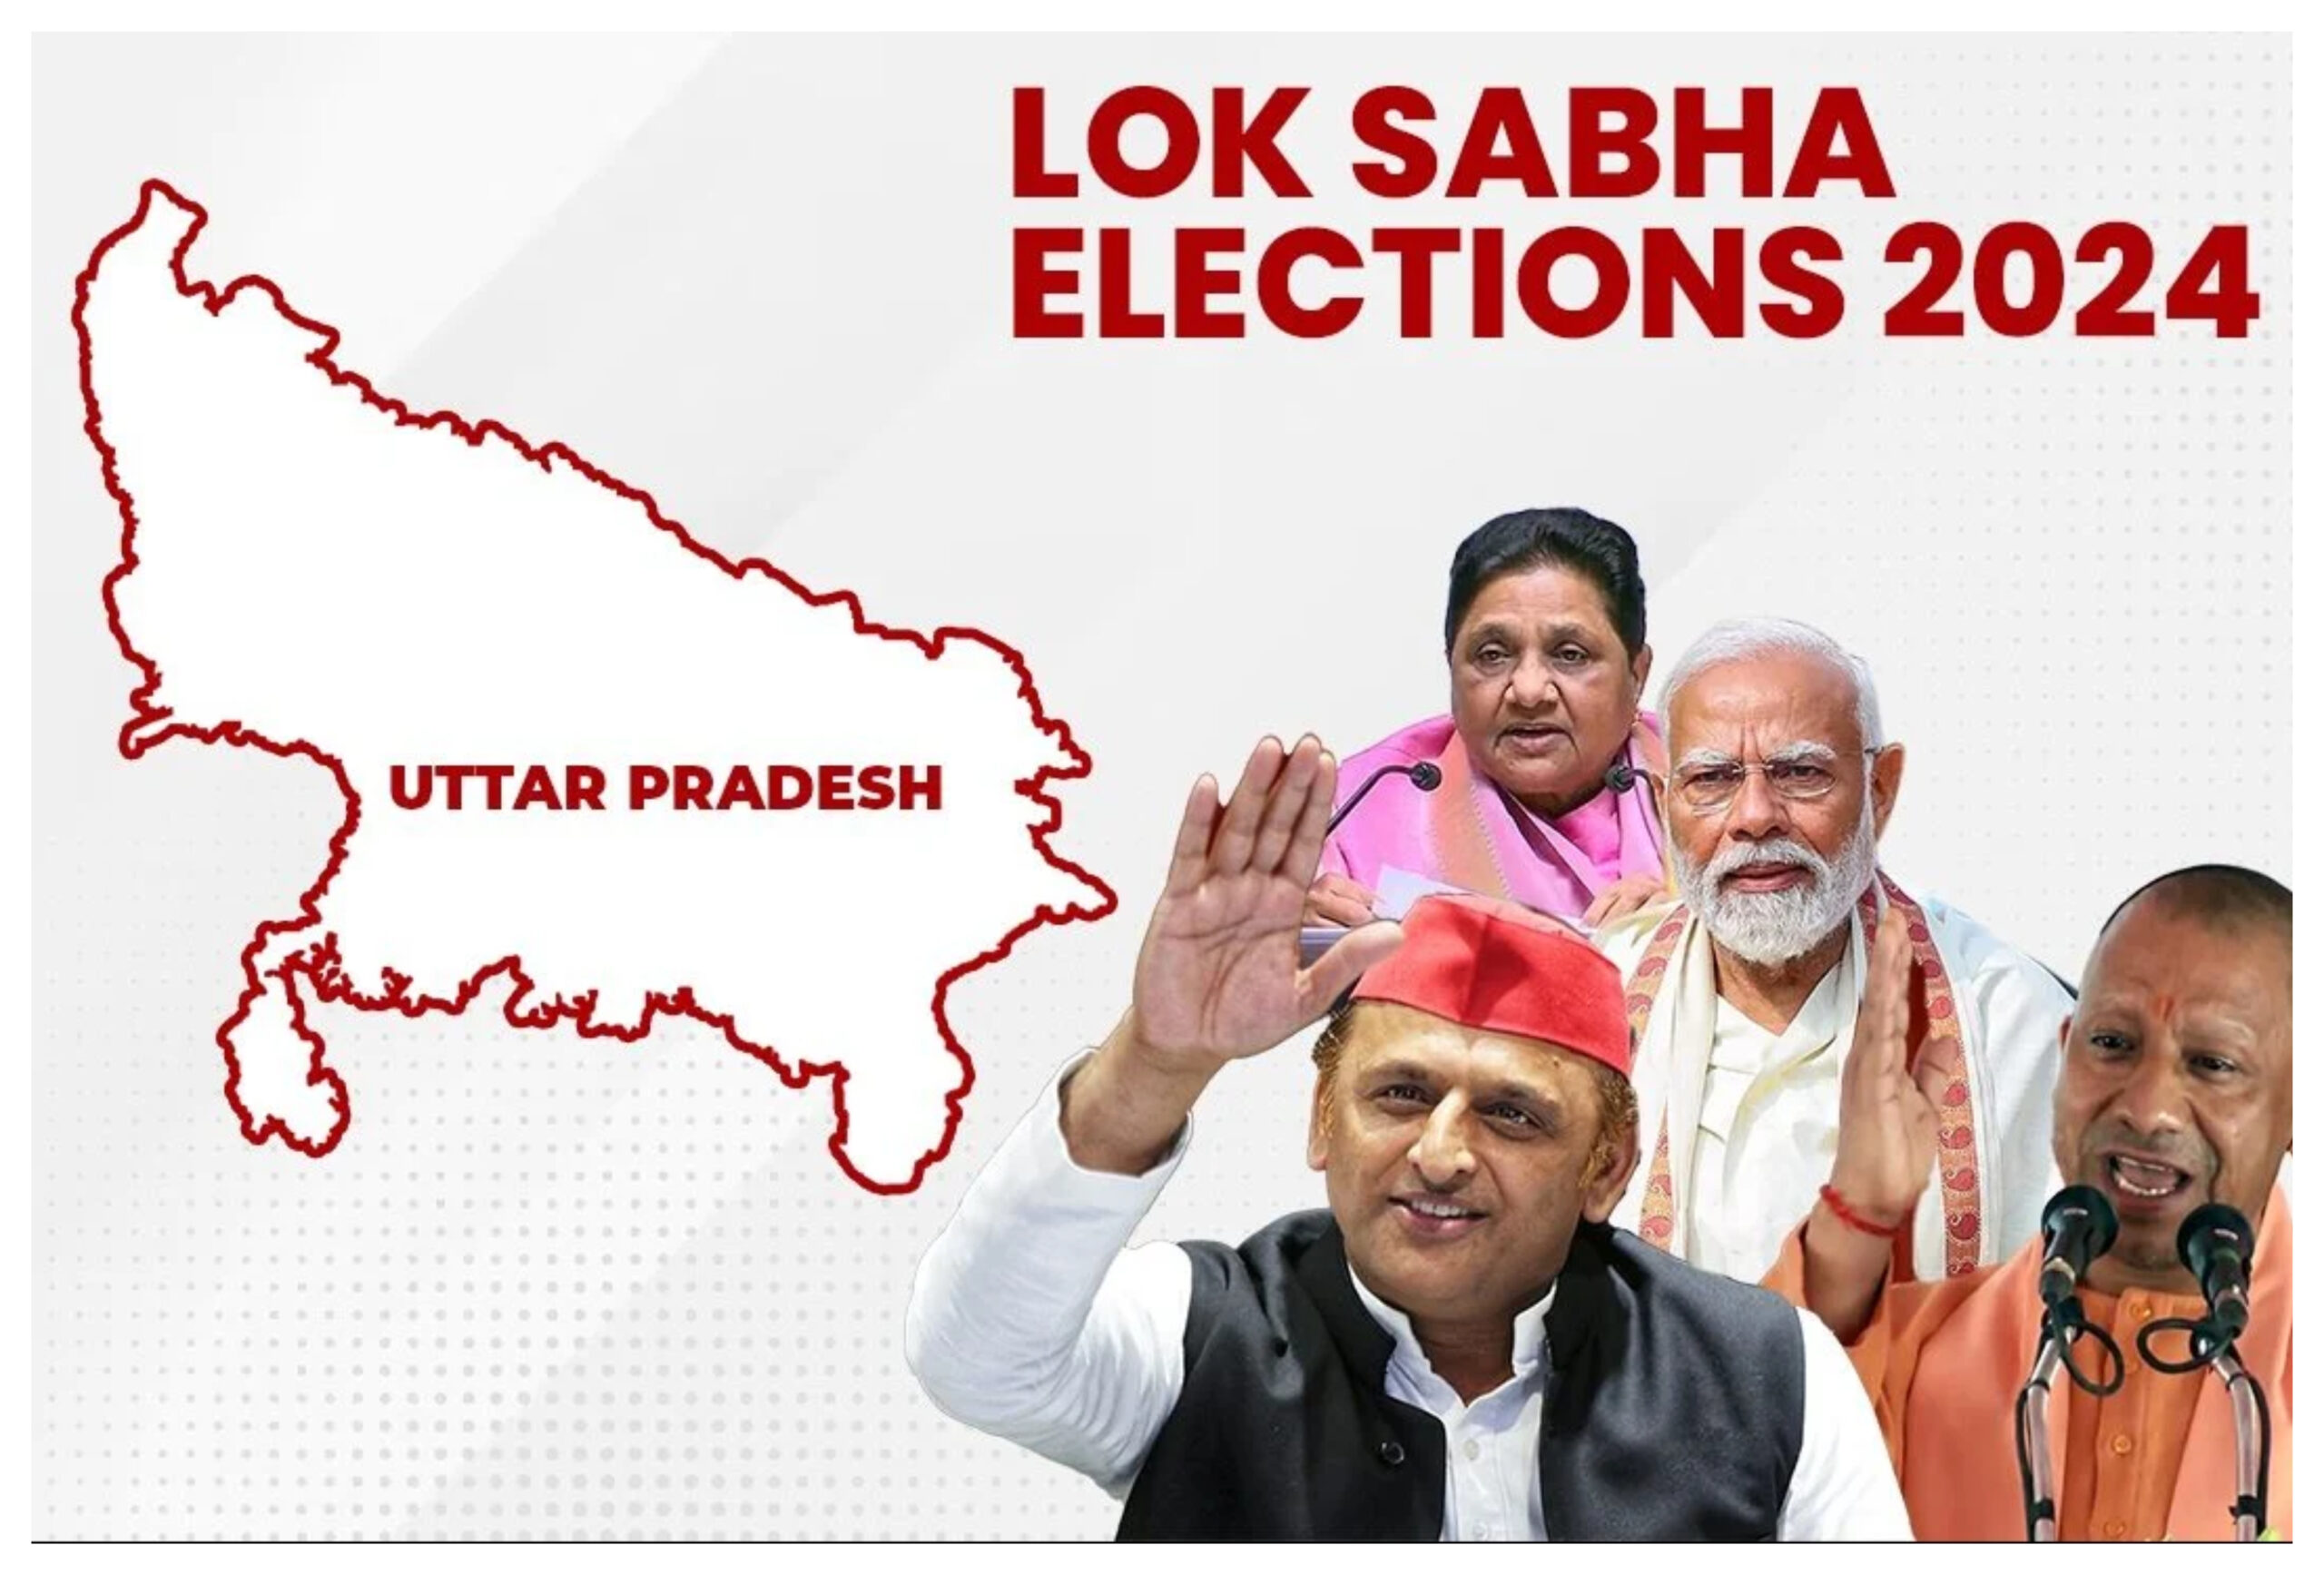 Loksabha Election 2024, Development is the most important issue in Rampur, Uttar Pradesh in hindi news, Bjp, Sapa, Congress, Aap, Election, Political news in hindi, Uttar Pradesh news in hindi, Total news in hindi, Yogi Adityanath, PM Modi, Akhilesh Yadav